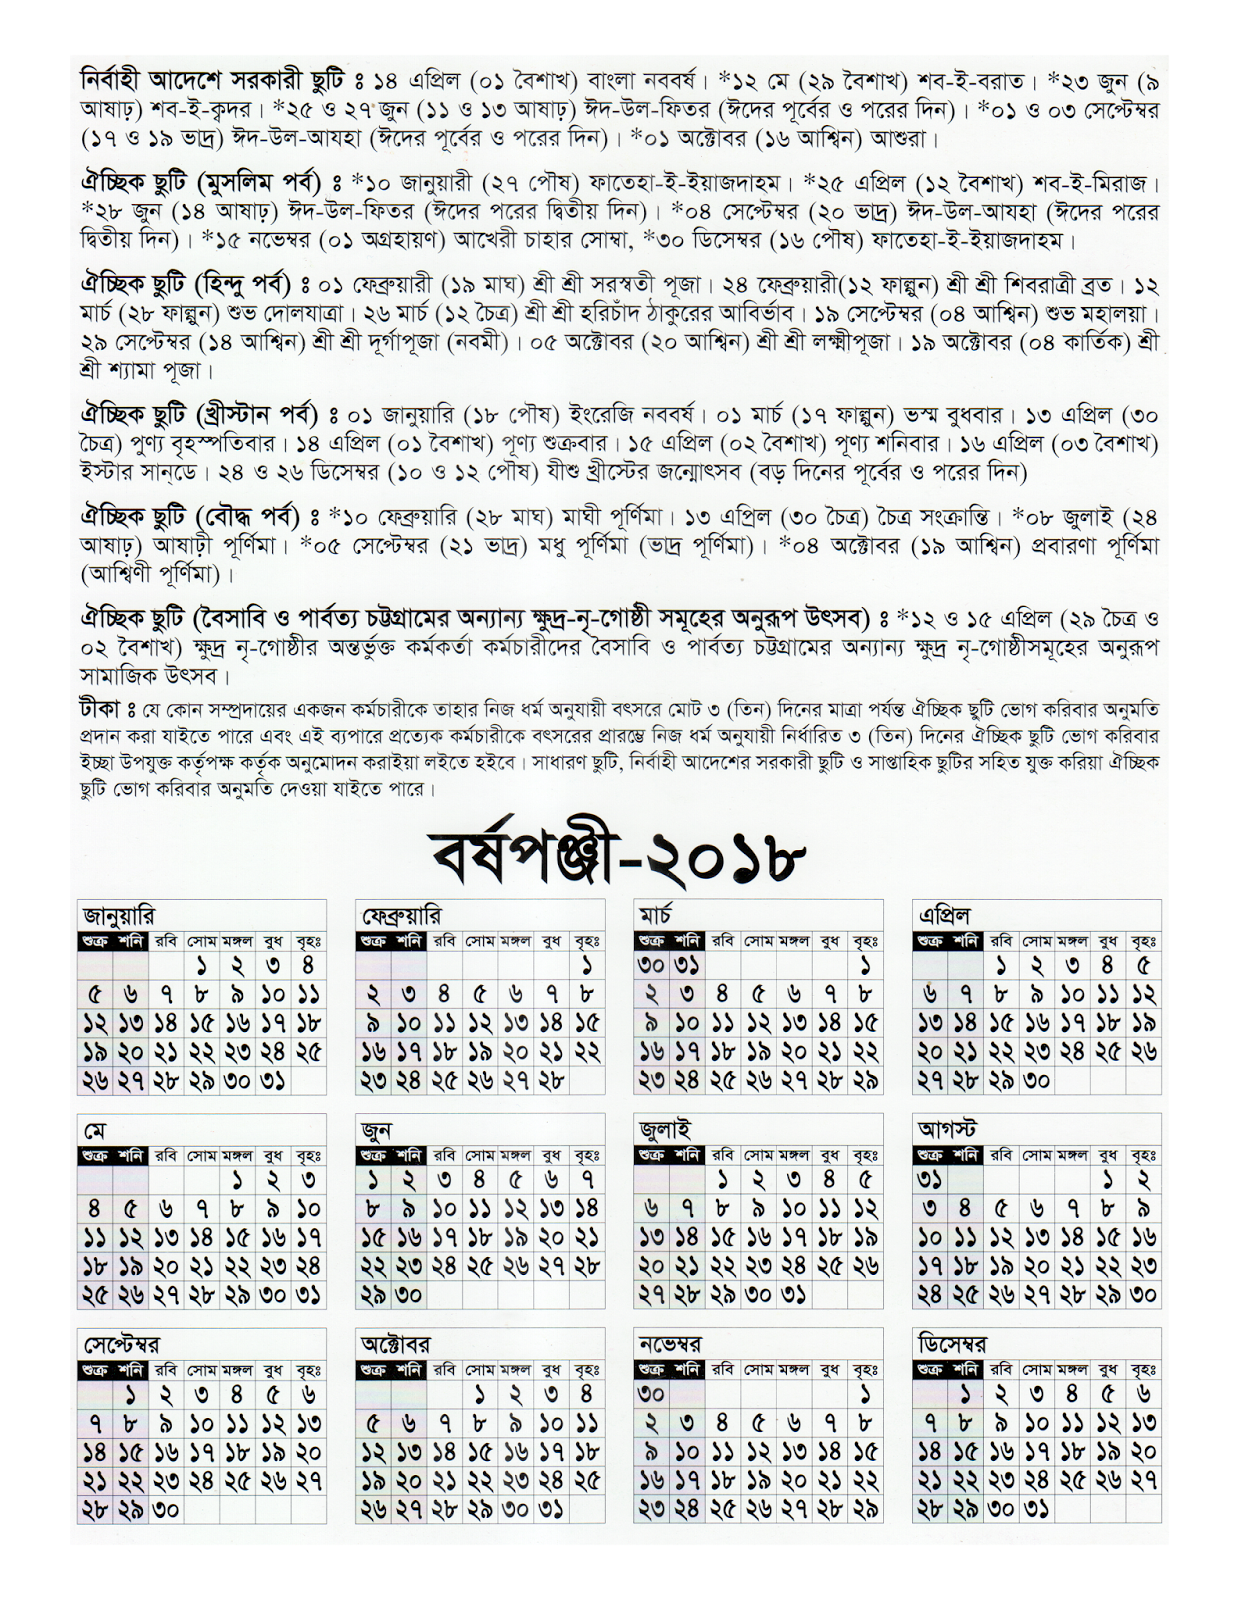 Bangladesh Government Holiday Calendar 2017  Life in 